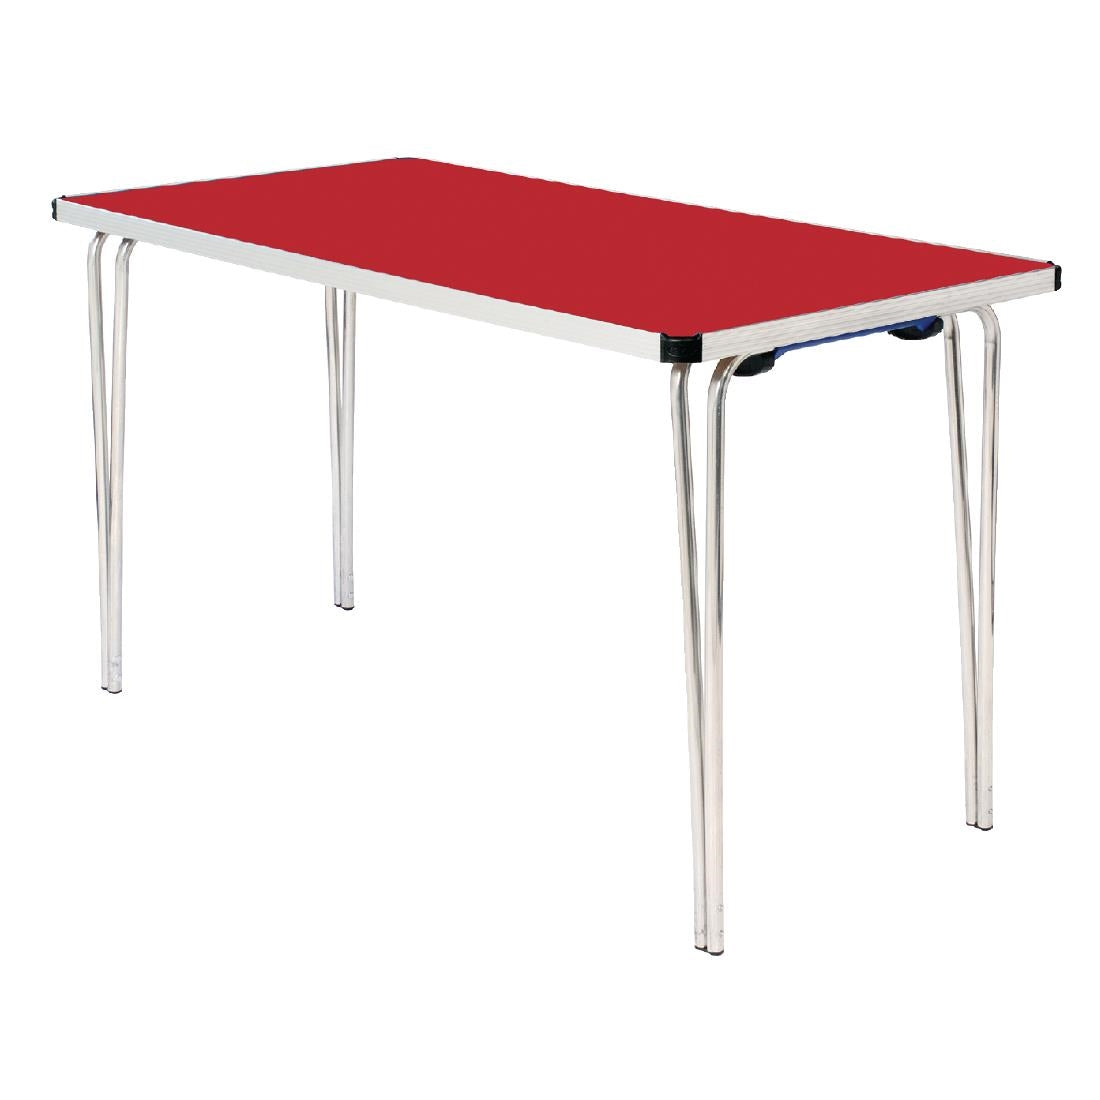 DM949 Gopak Contour Folding Table Red 4ft JD Catering Equipment Solutions Ltd